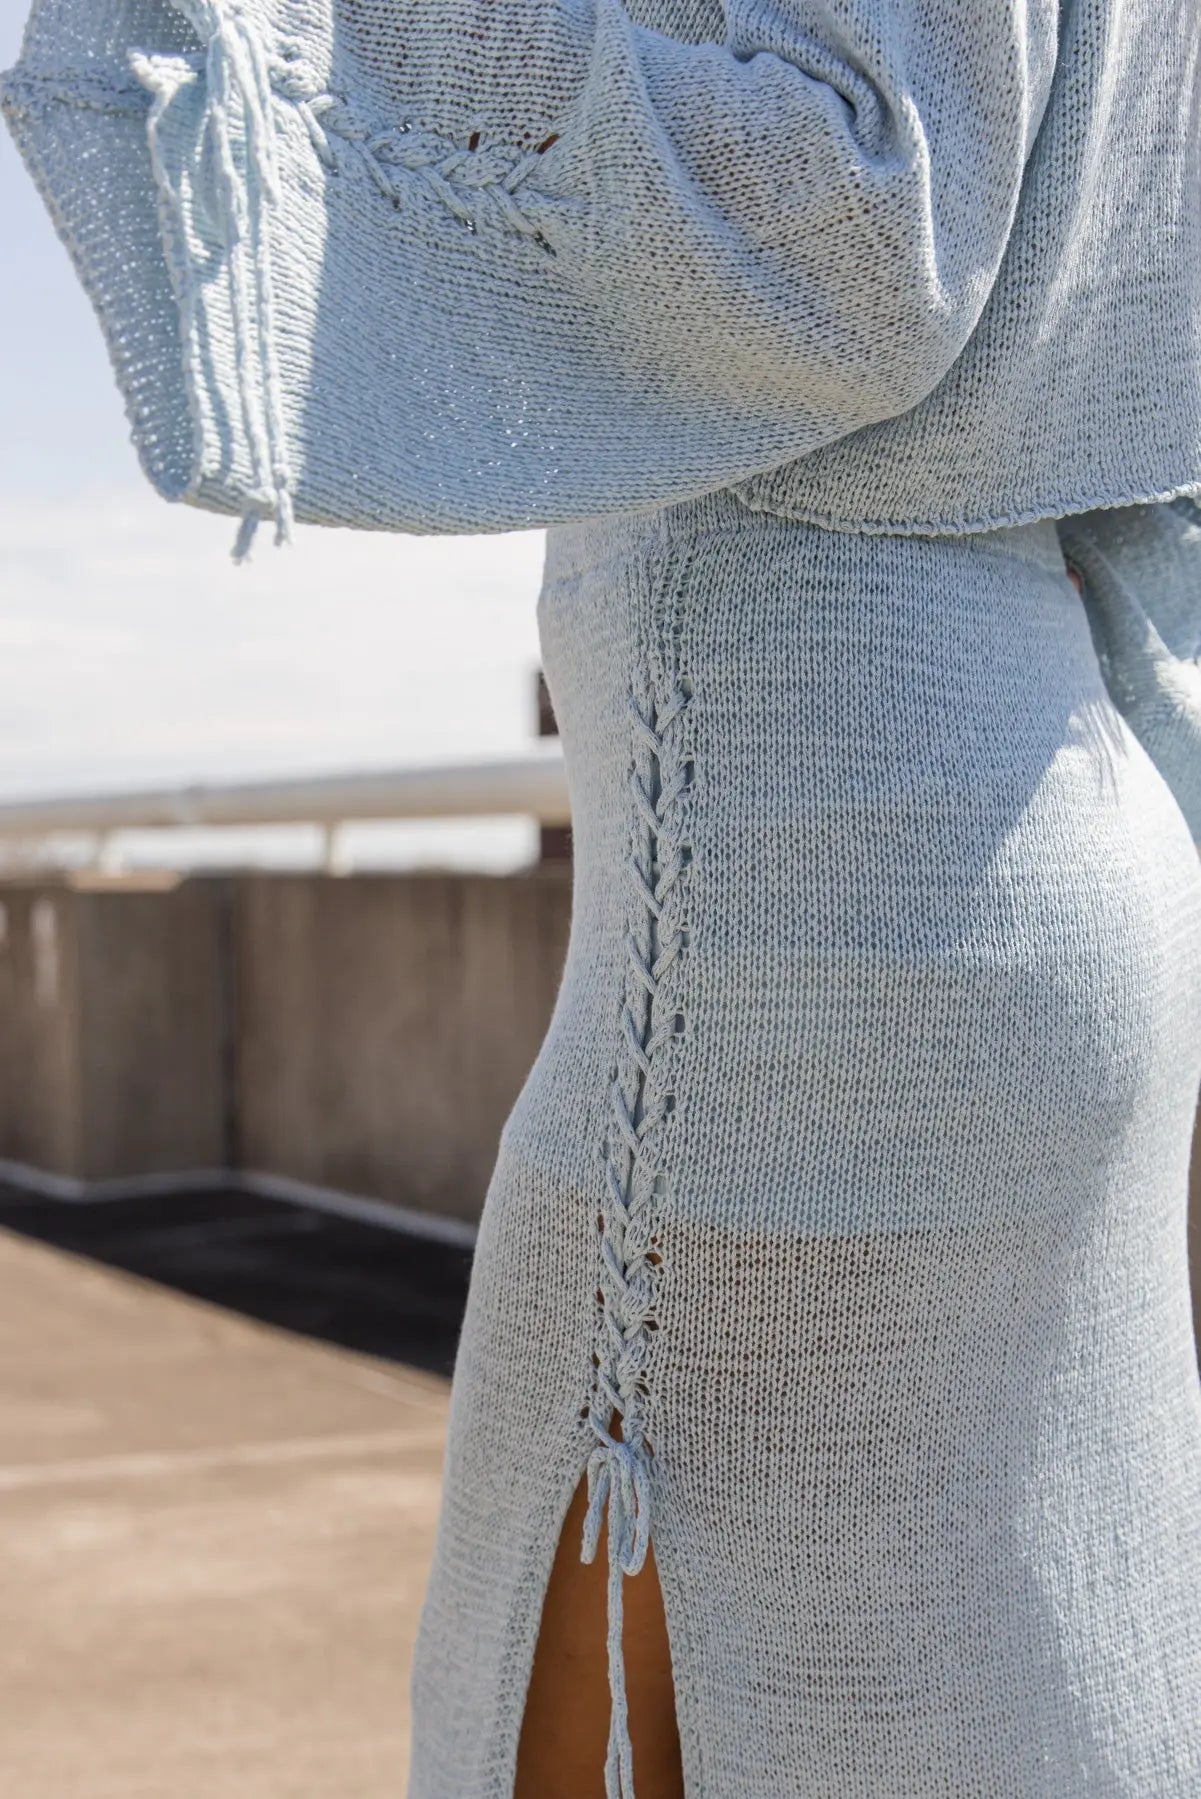 Braidy Bunch Blue Knit Top & Skirt Set - FINAL SALE - JO+CO